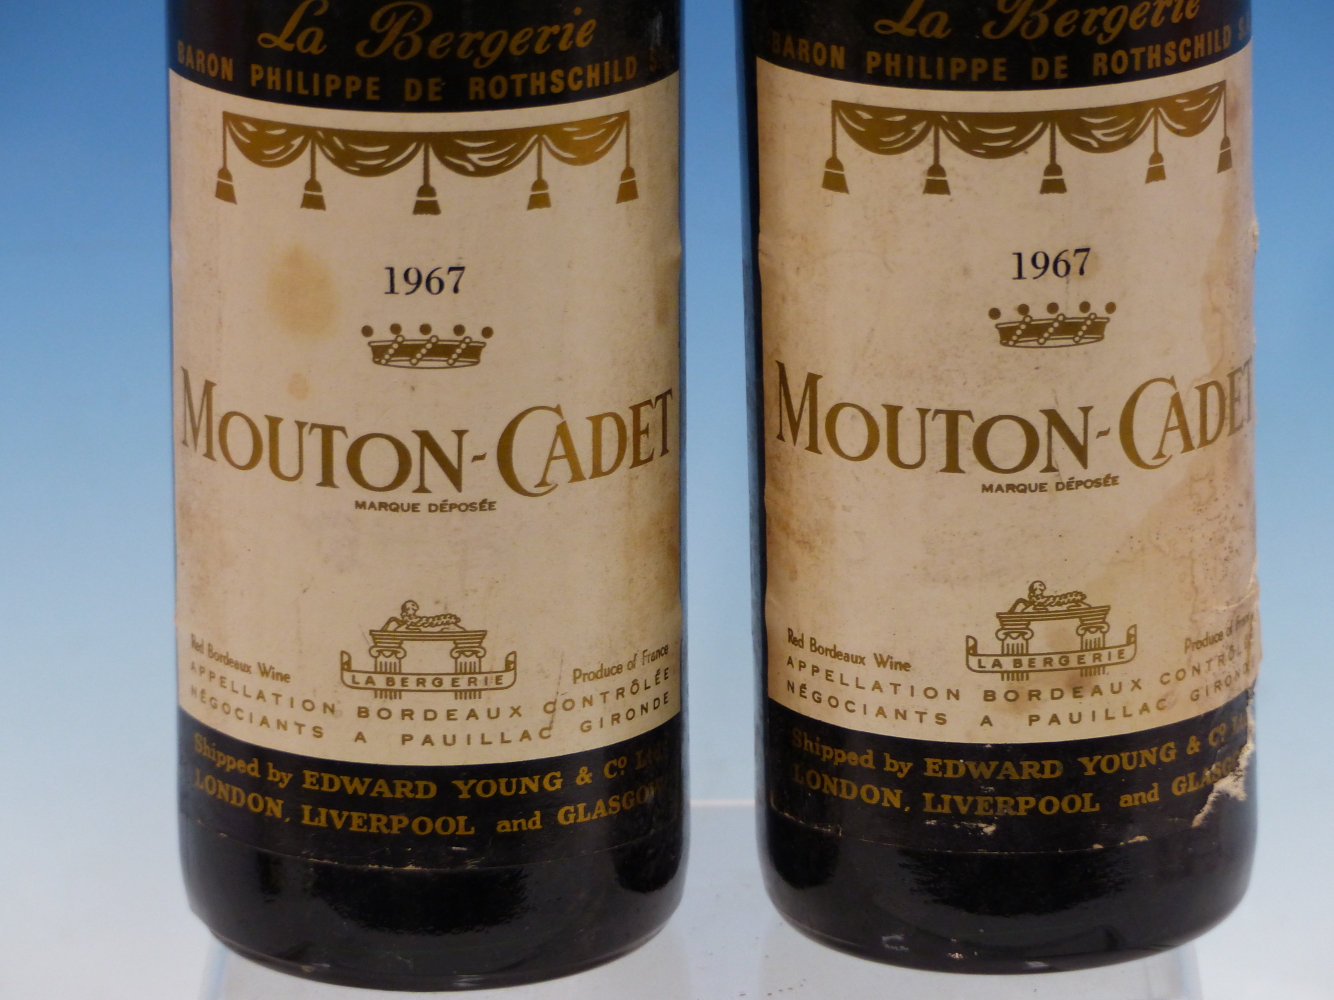 WINE. BARON PHILLIPE DE ROTHSCHILD MOUTON CADET 1967 2 x BOTTLES. (2) - Image 2 of 3